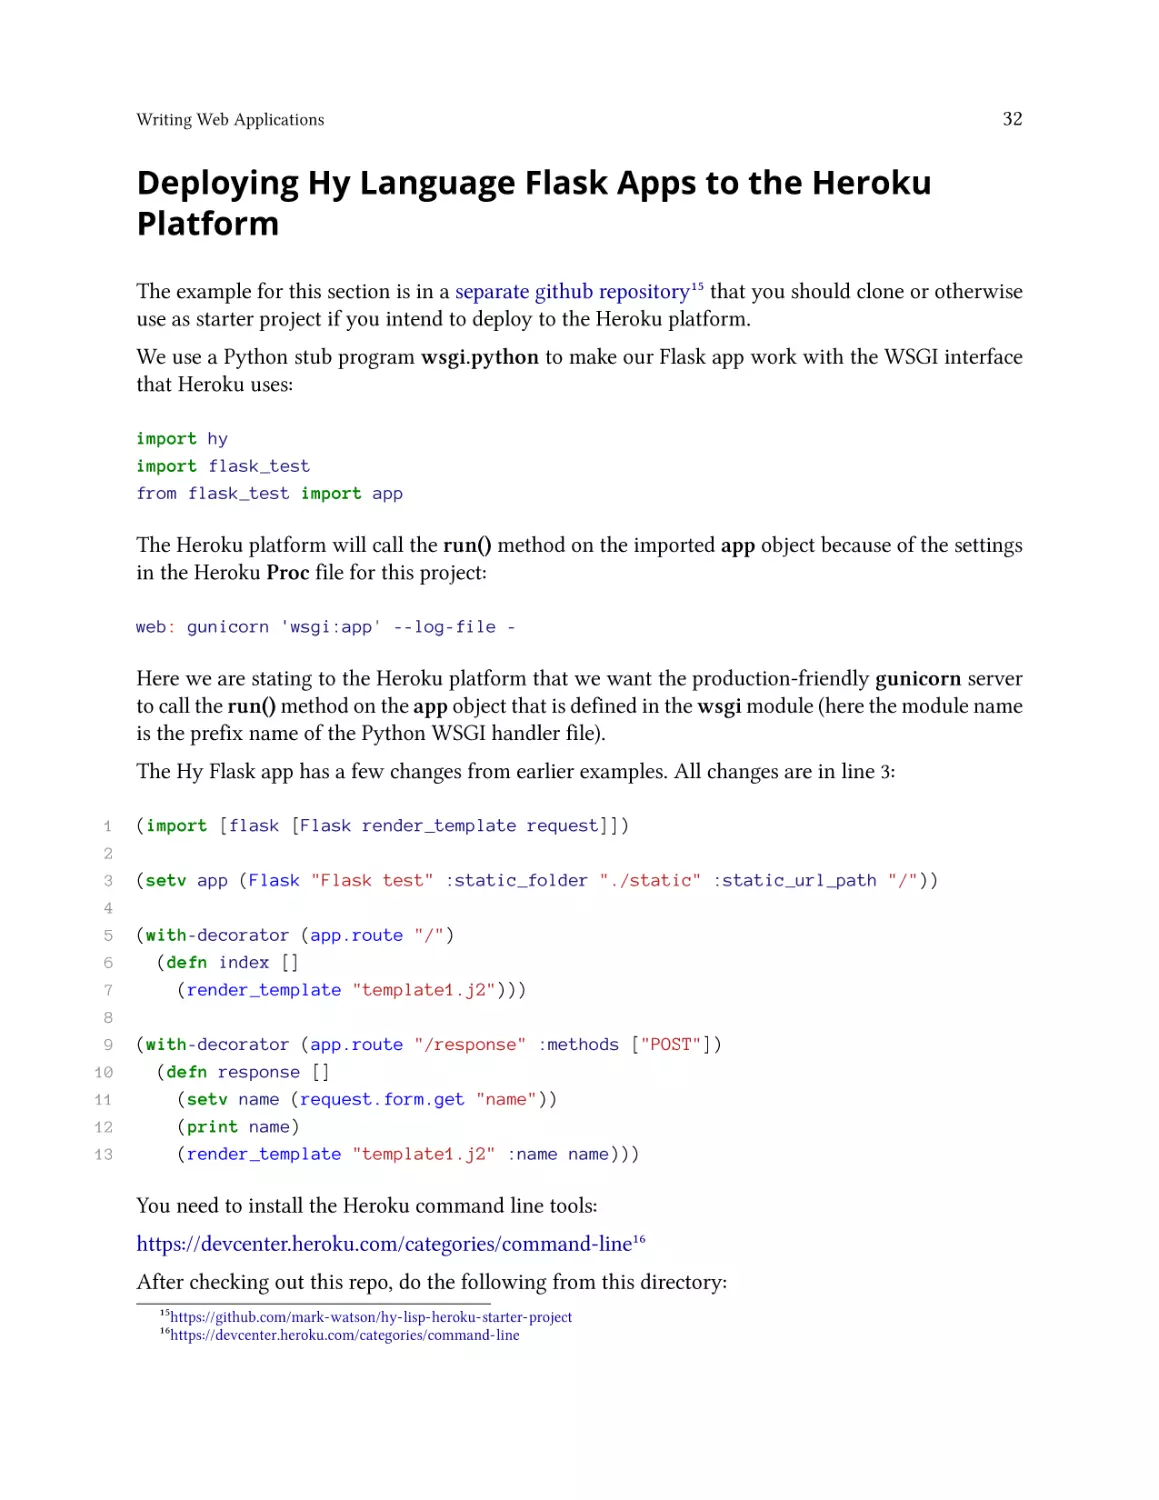 Deploying Hy Language Flask Apps to the Heroku Platform